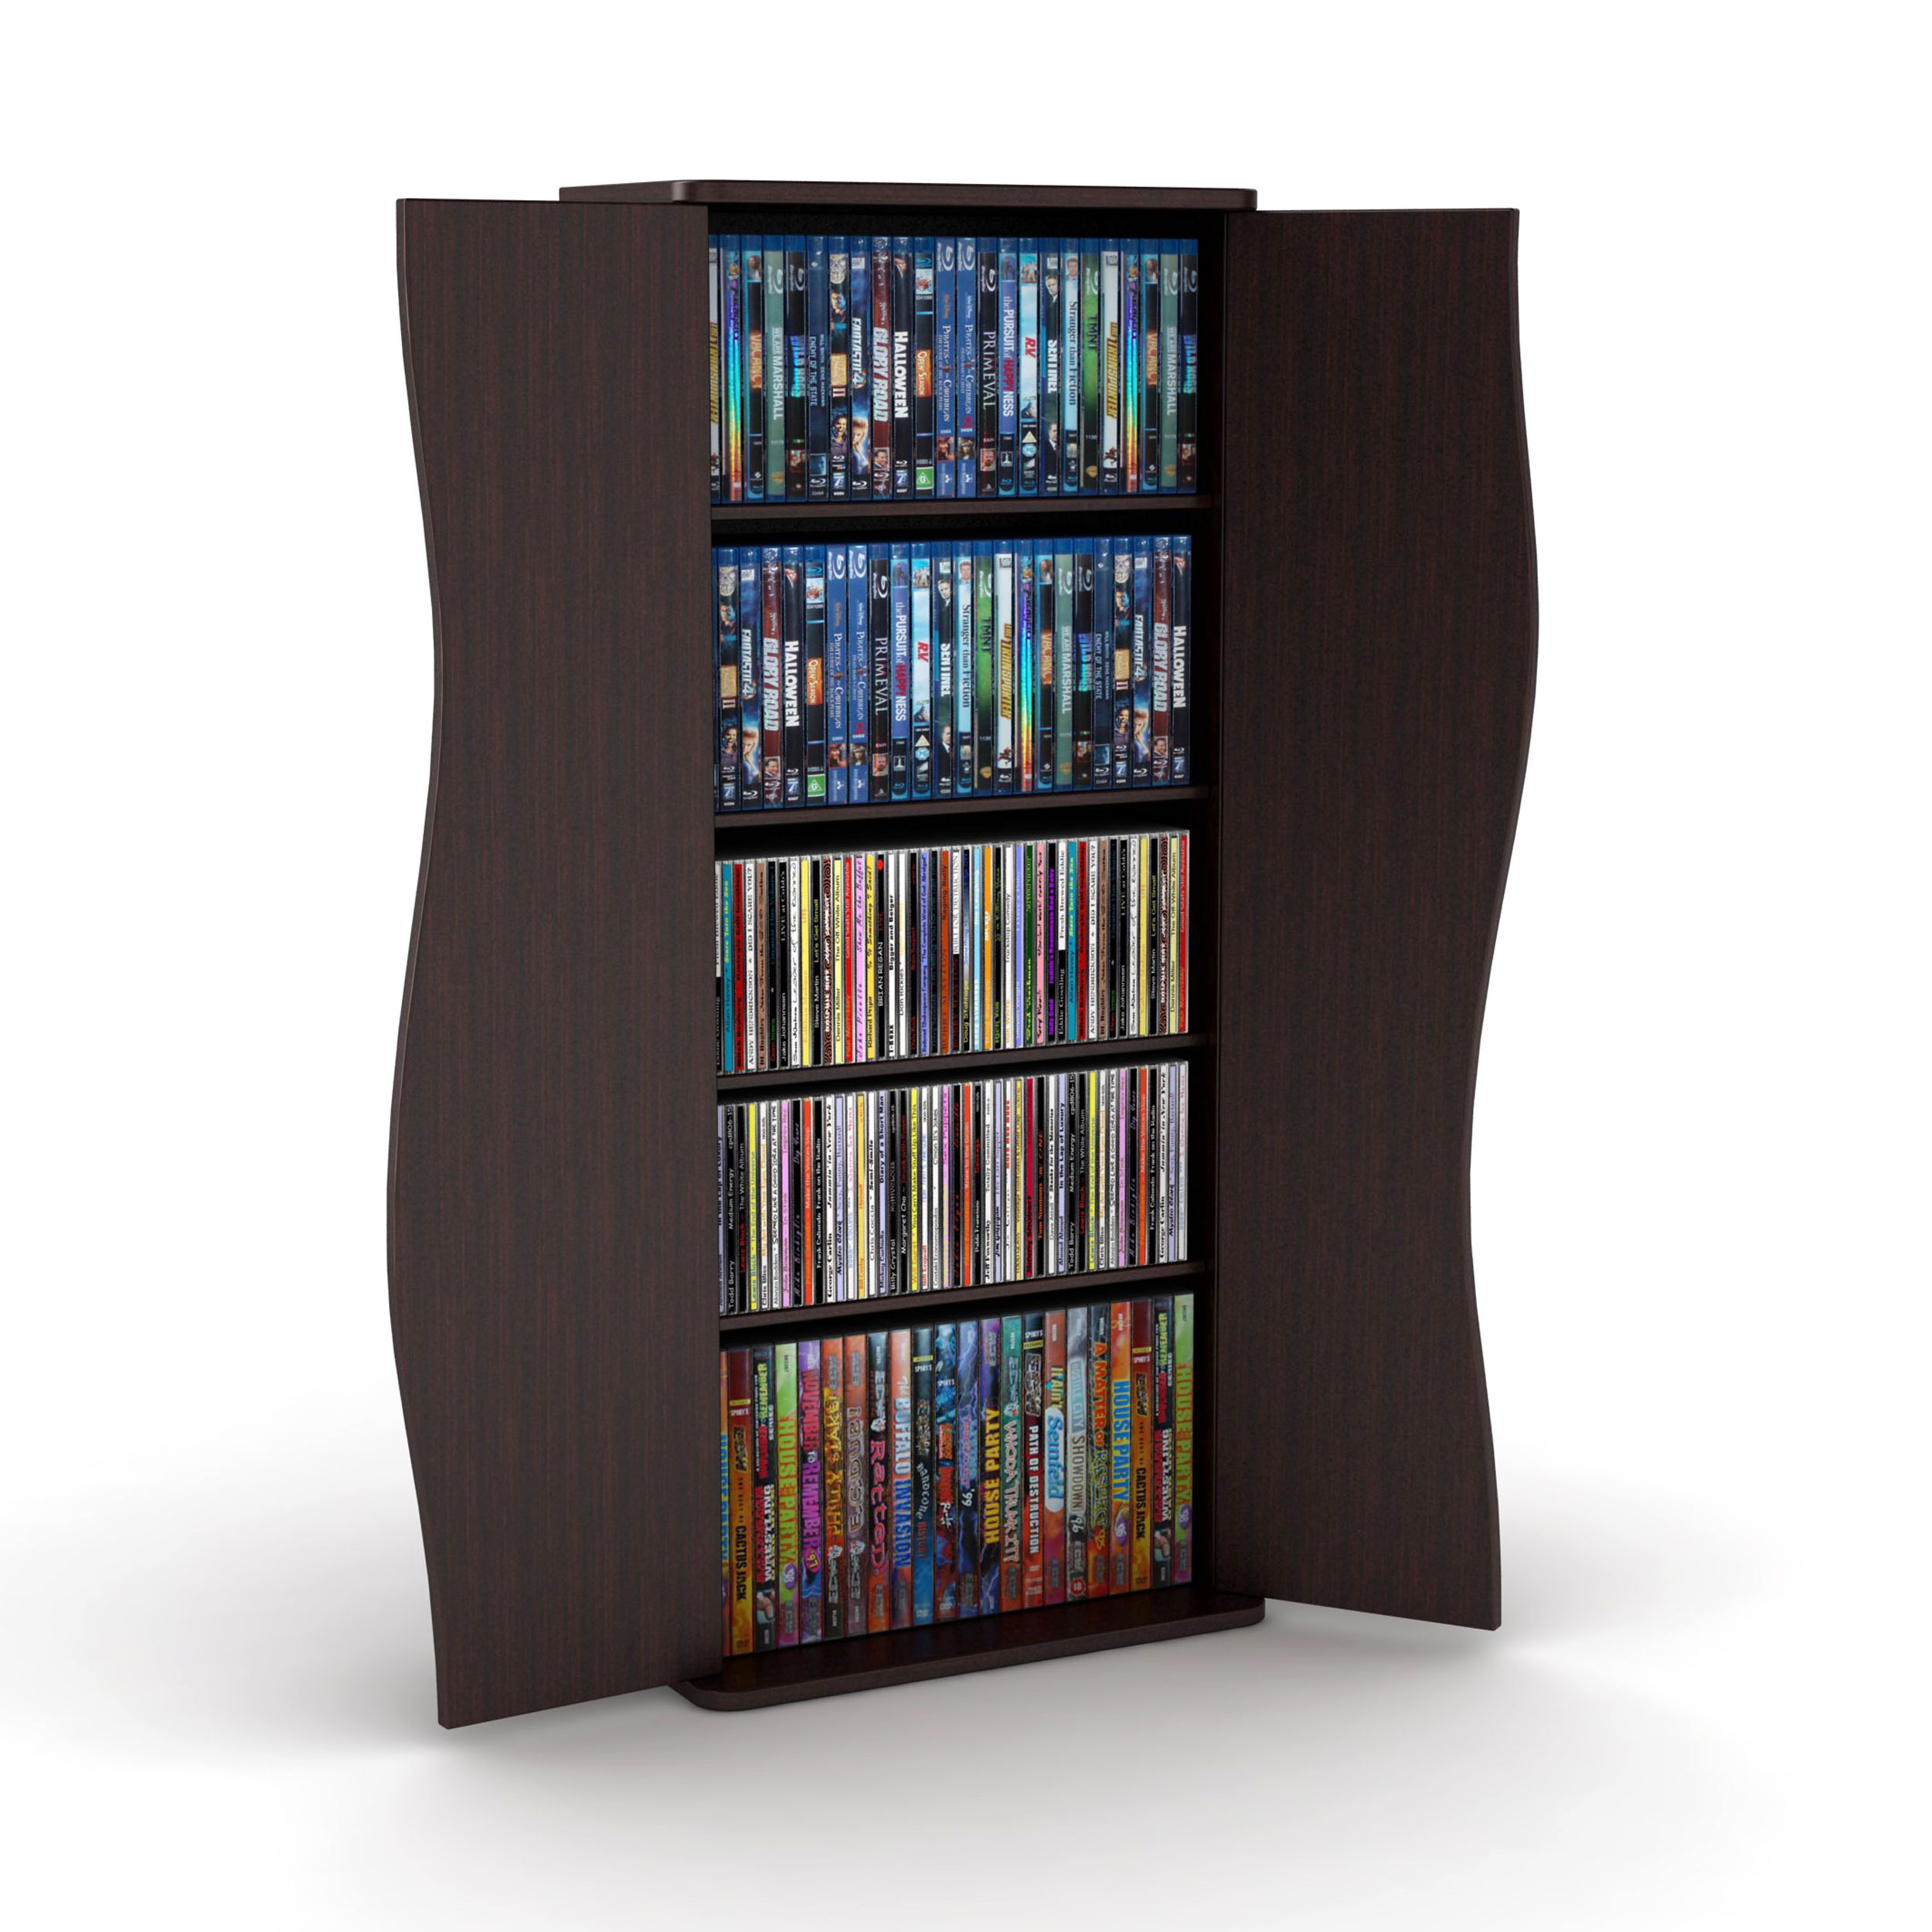 Atlantic 35" Venus Small 6-Shelf Media Storage Shelf & Cabinet (198 CDs, 88 DVDs, 125 BluRays), Espresso - image 4 of 7